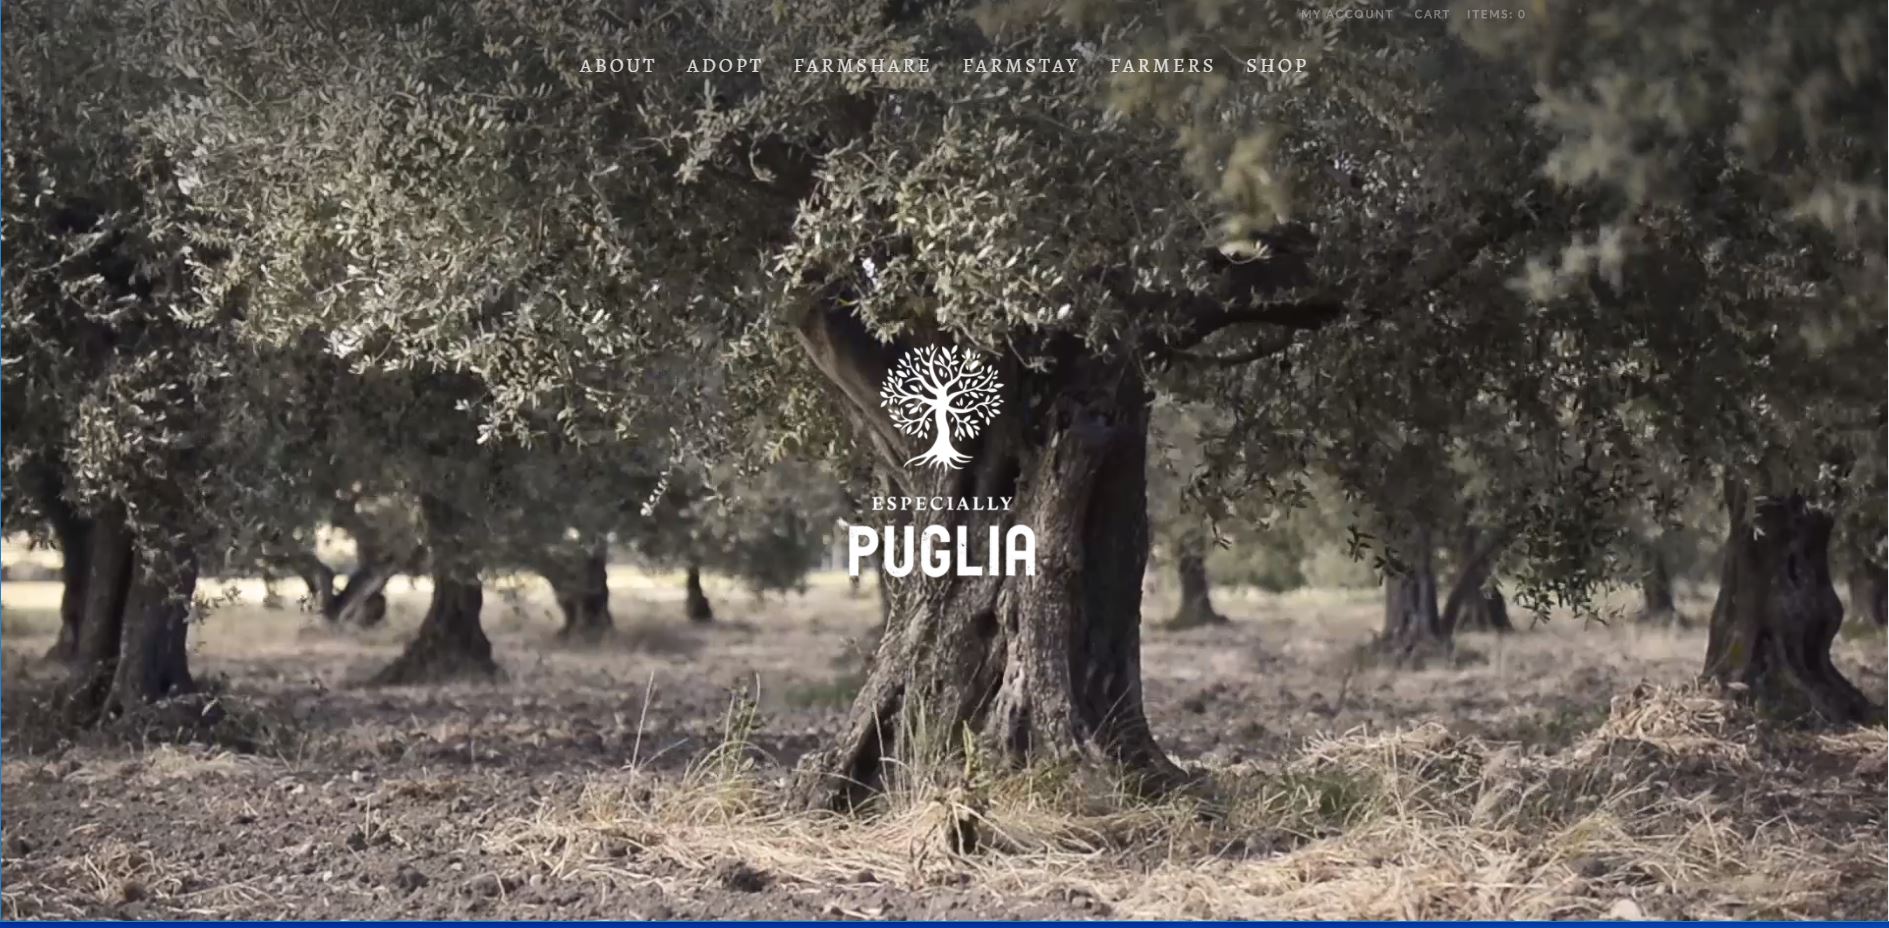 Especially Puglia Website